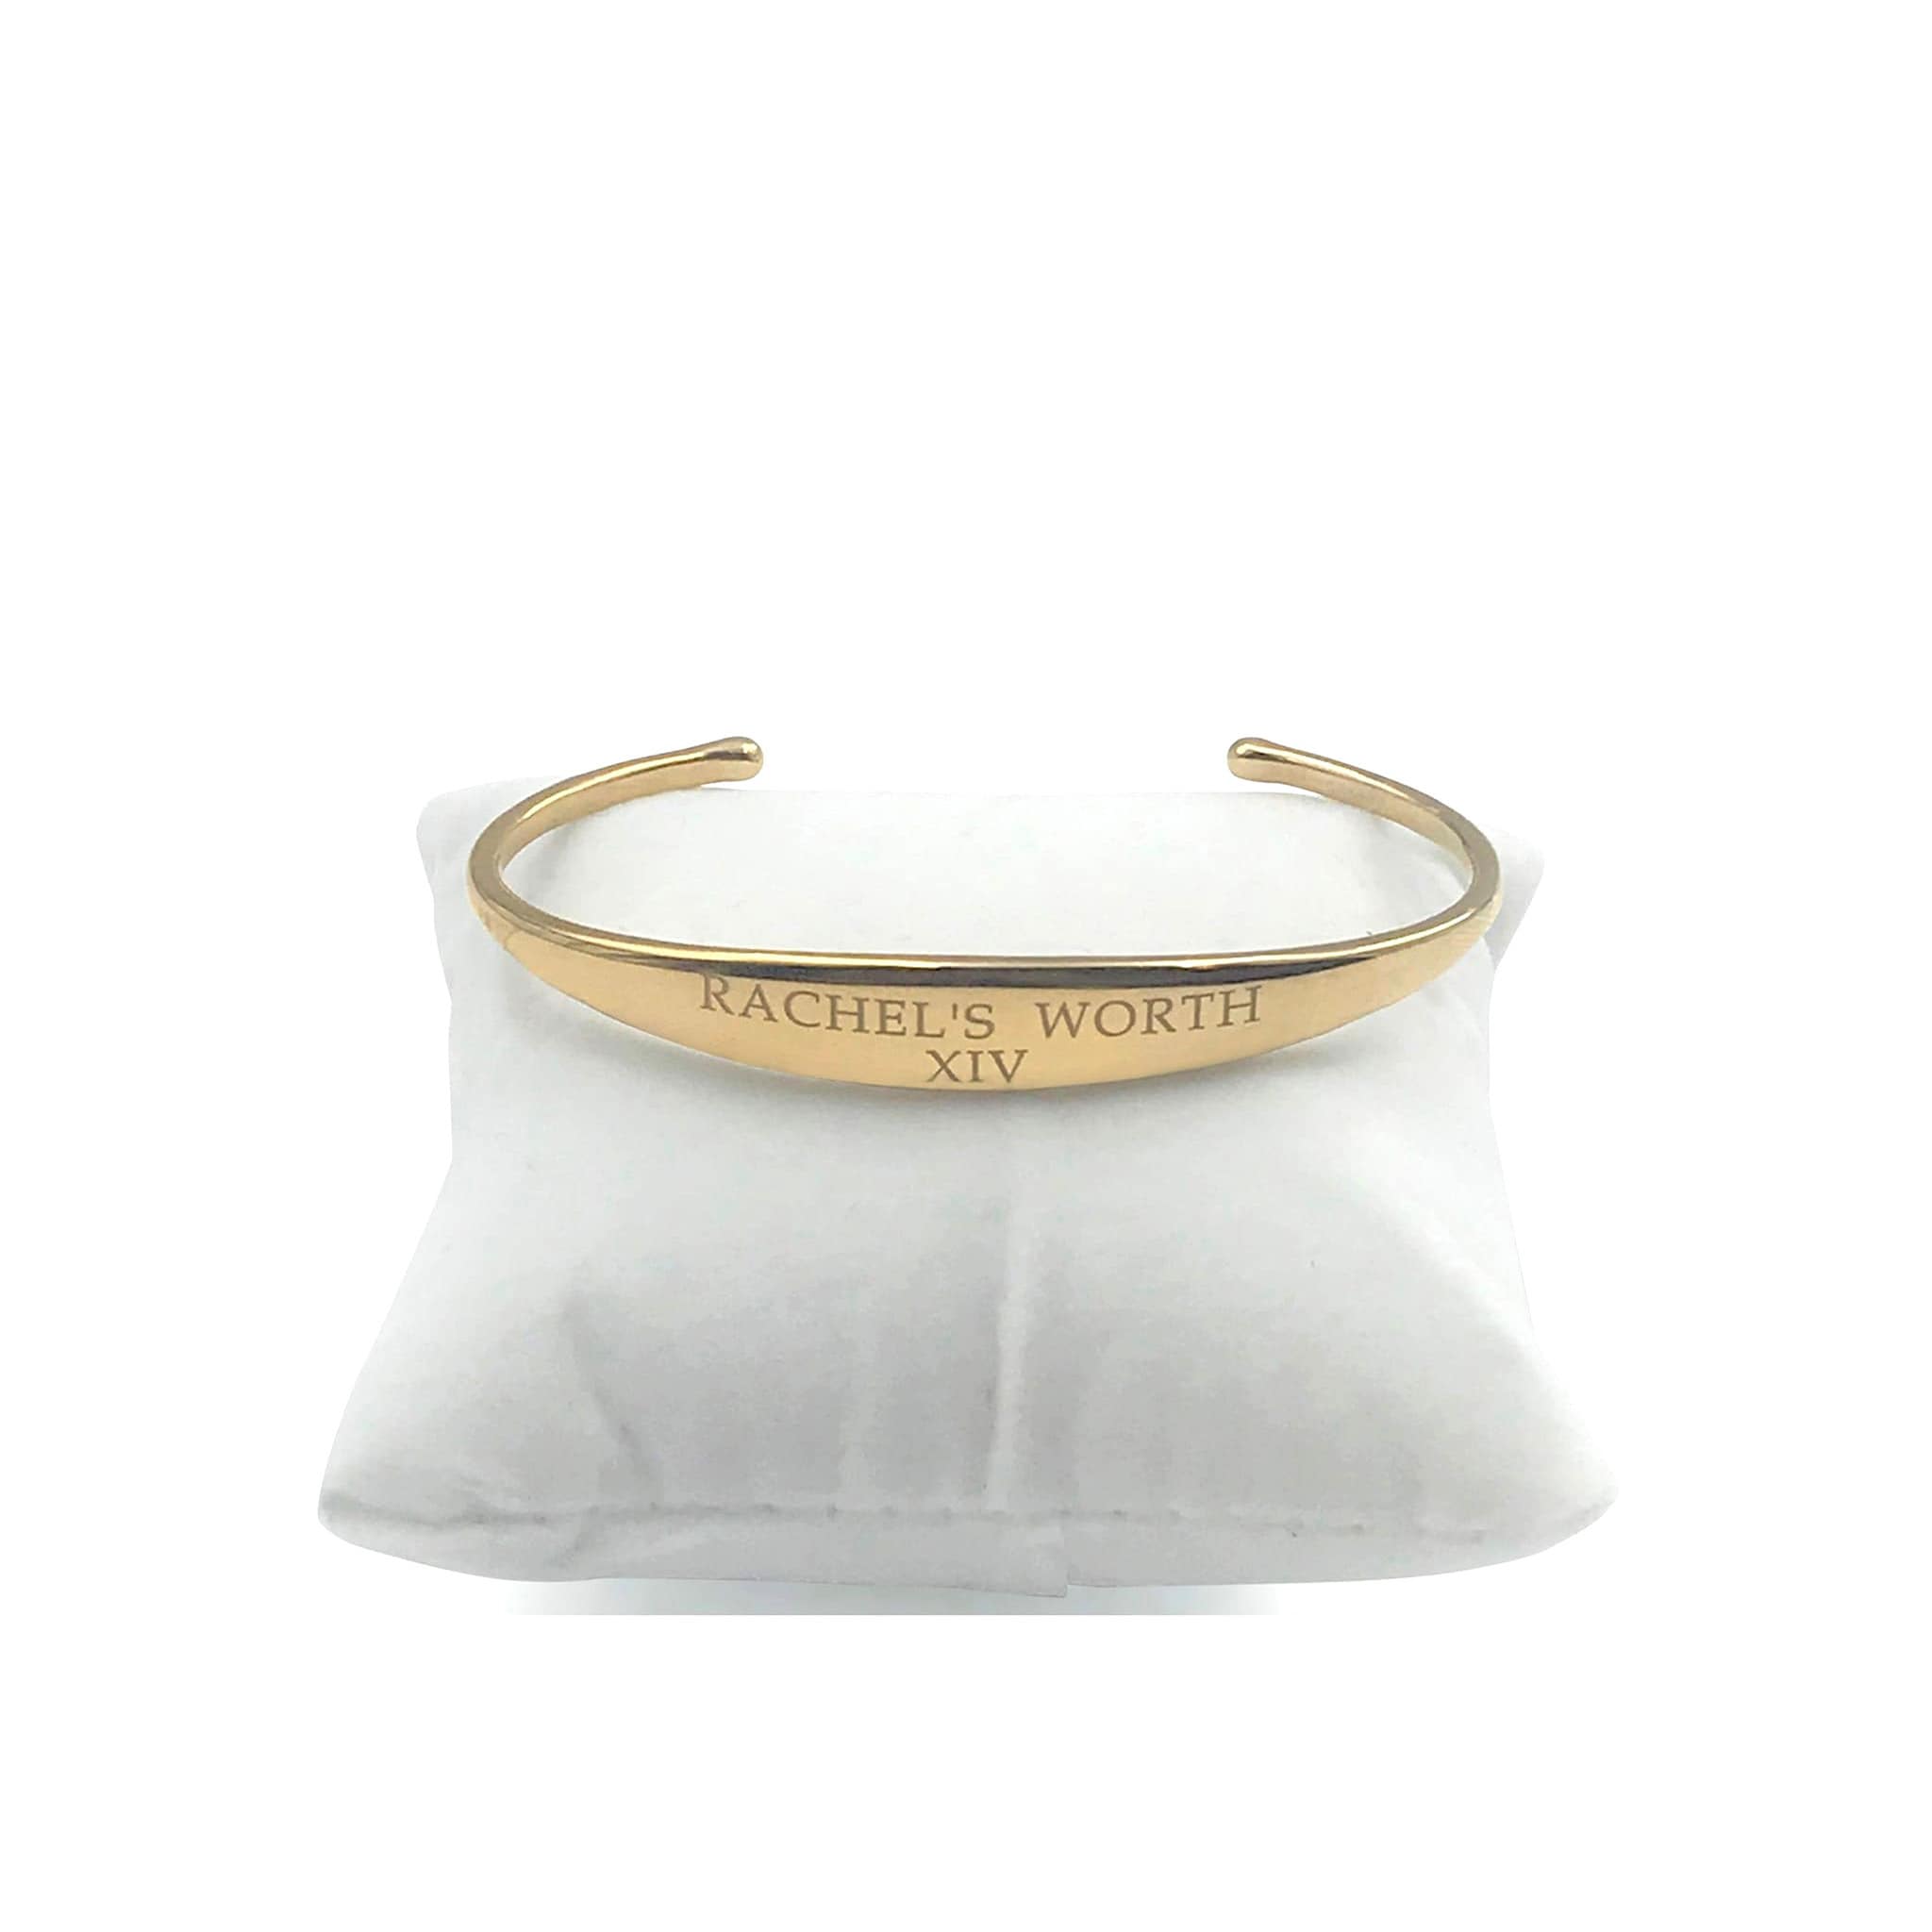 XIV Cuff Bracelet in 18k Yellow Gold Vermeil